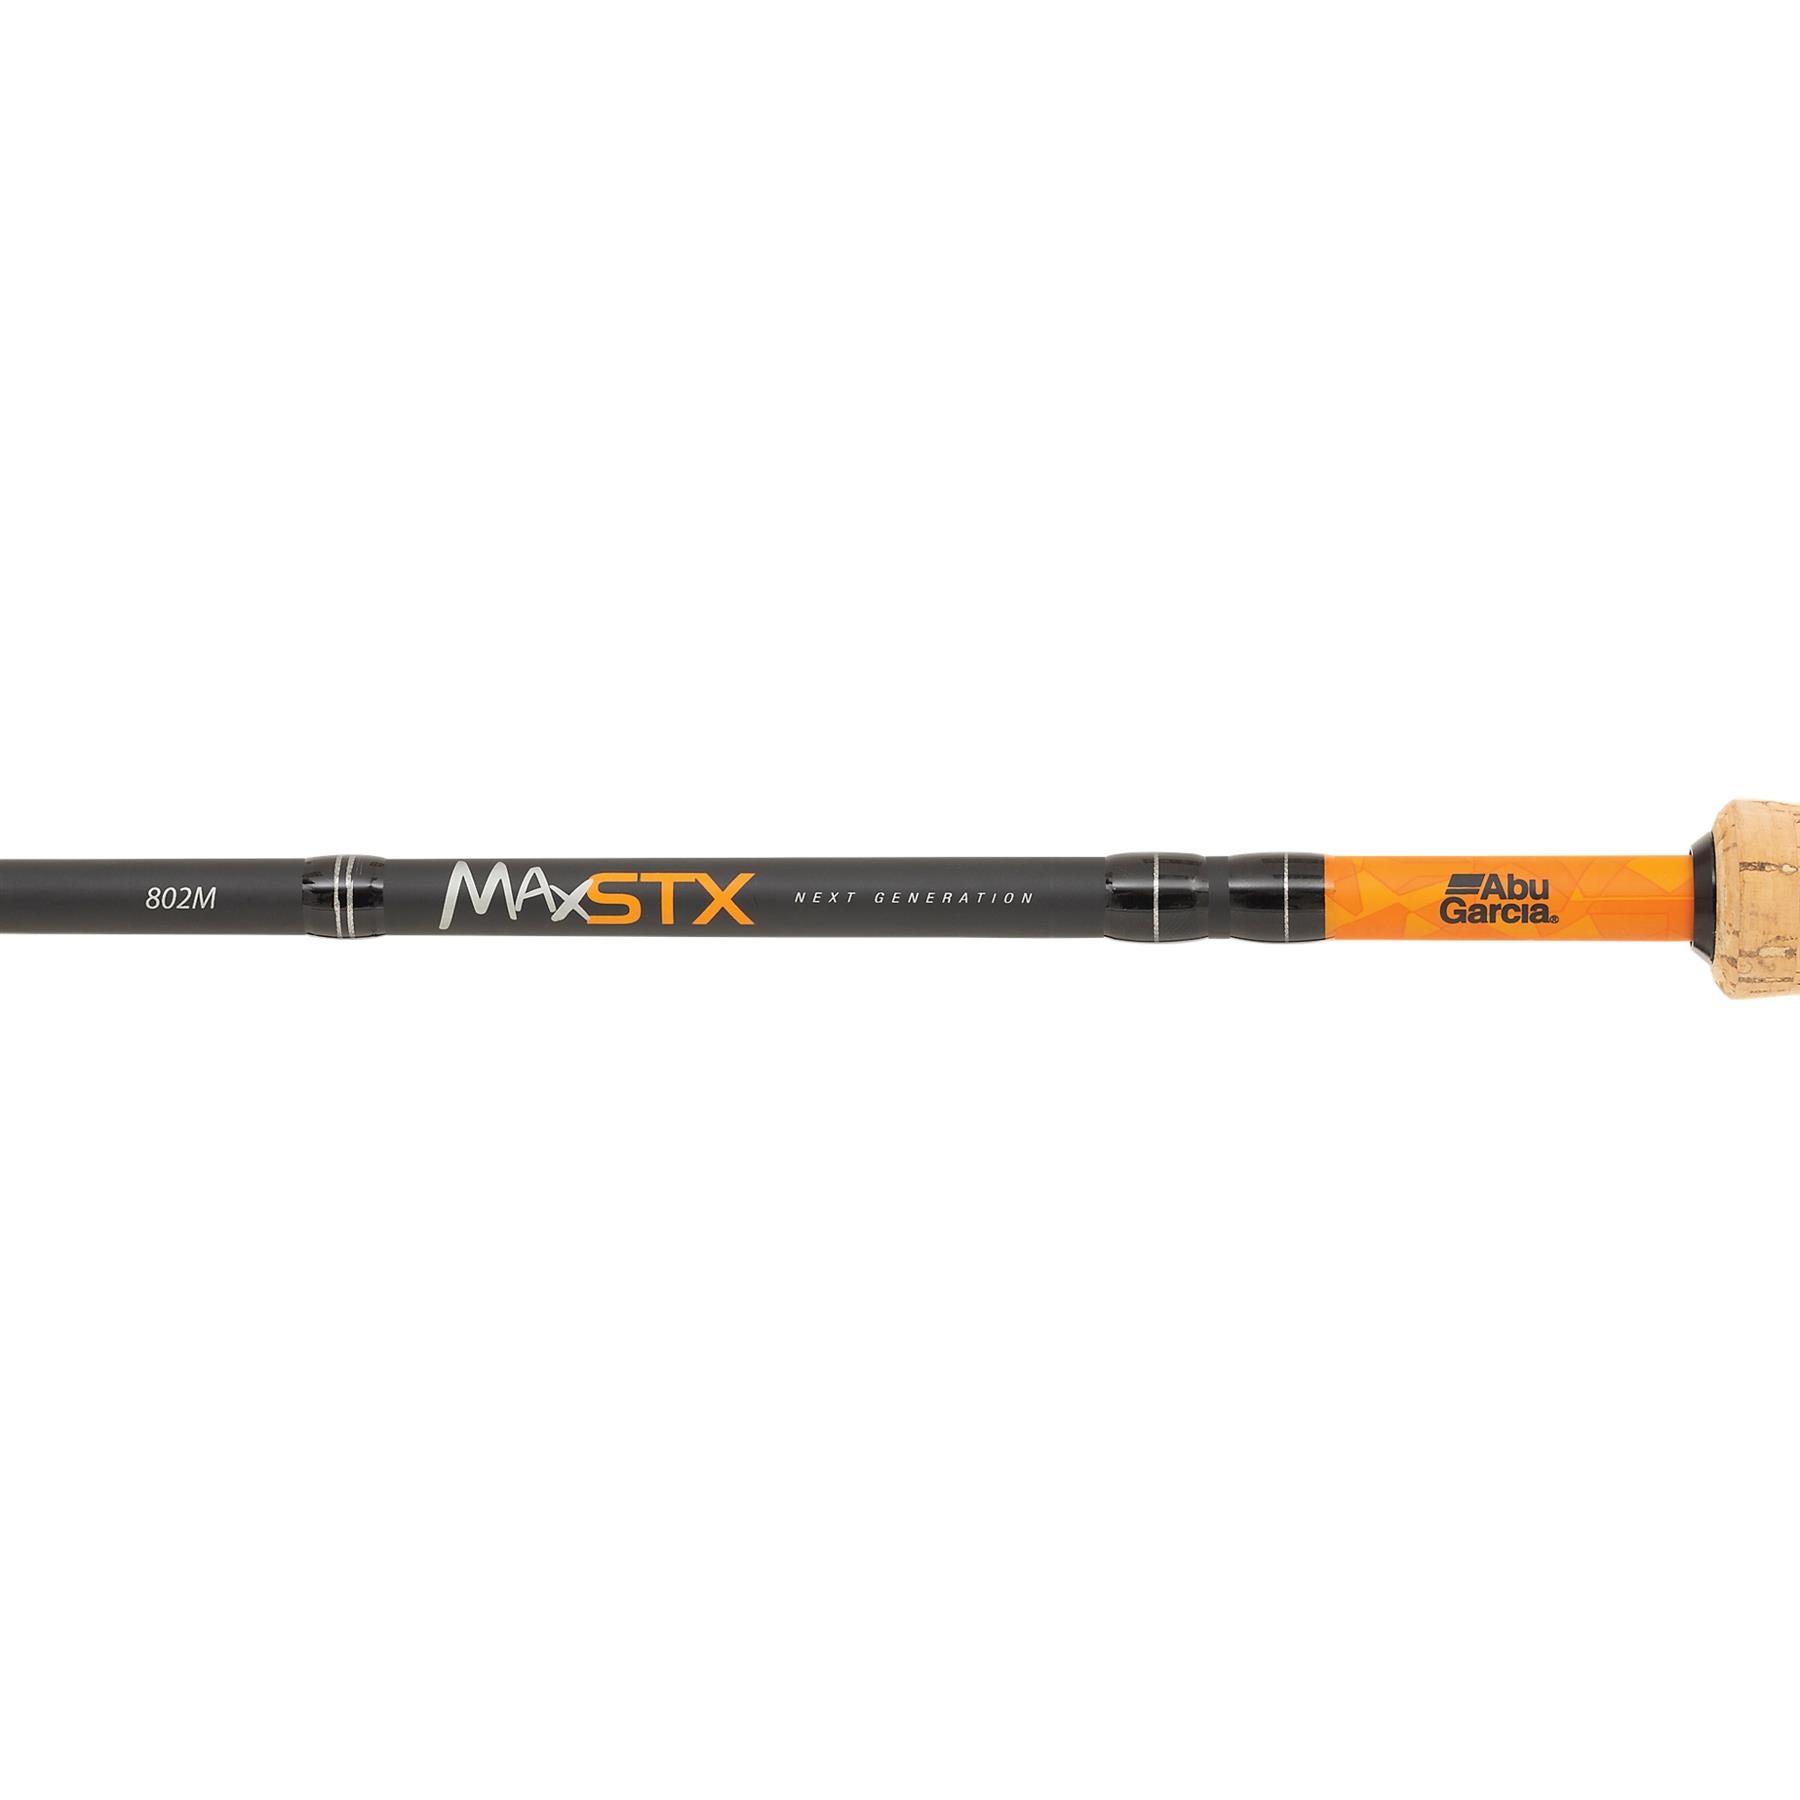 Abu Garcia Max STX Spinning Combo 10'0 20-60g – Anglers Corner